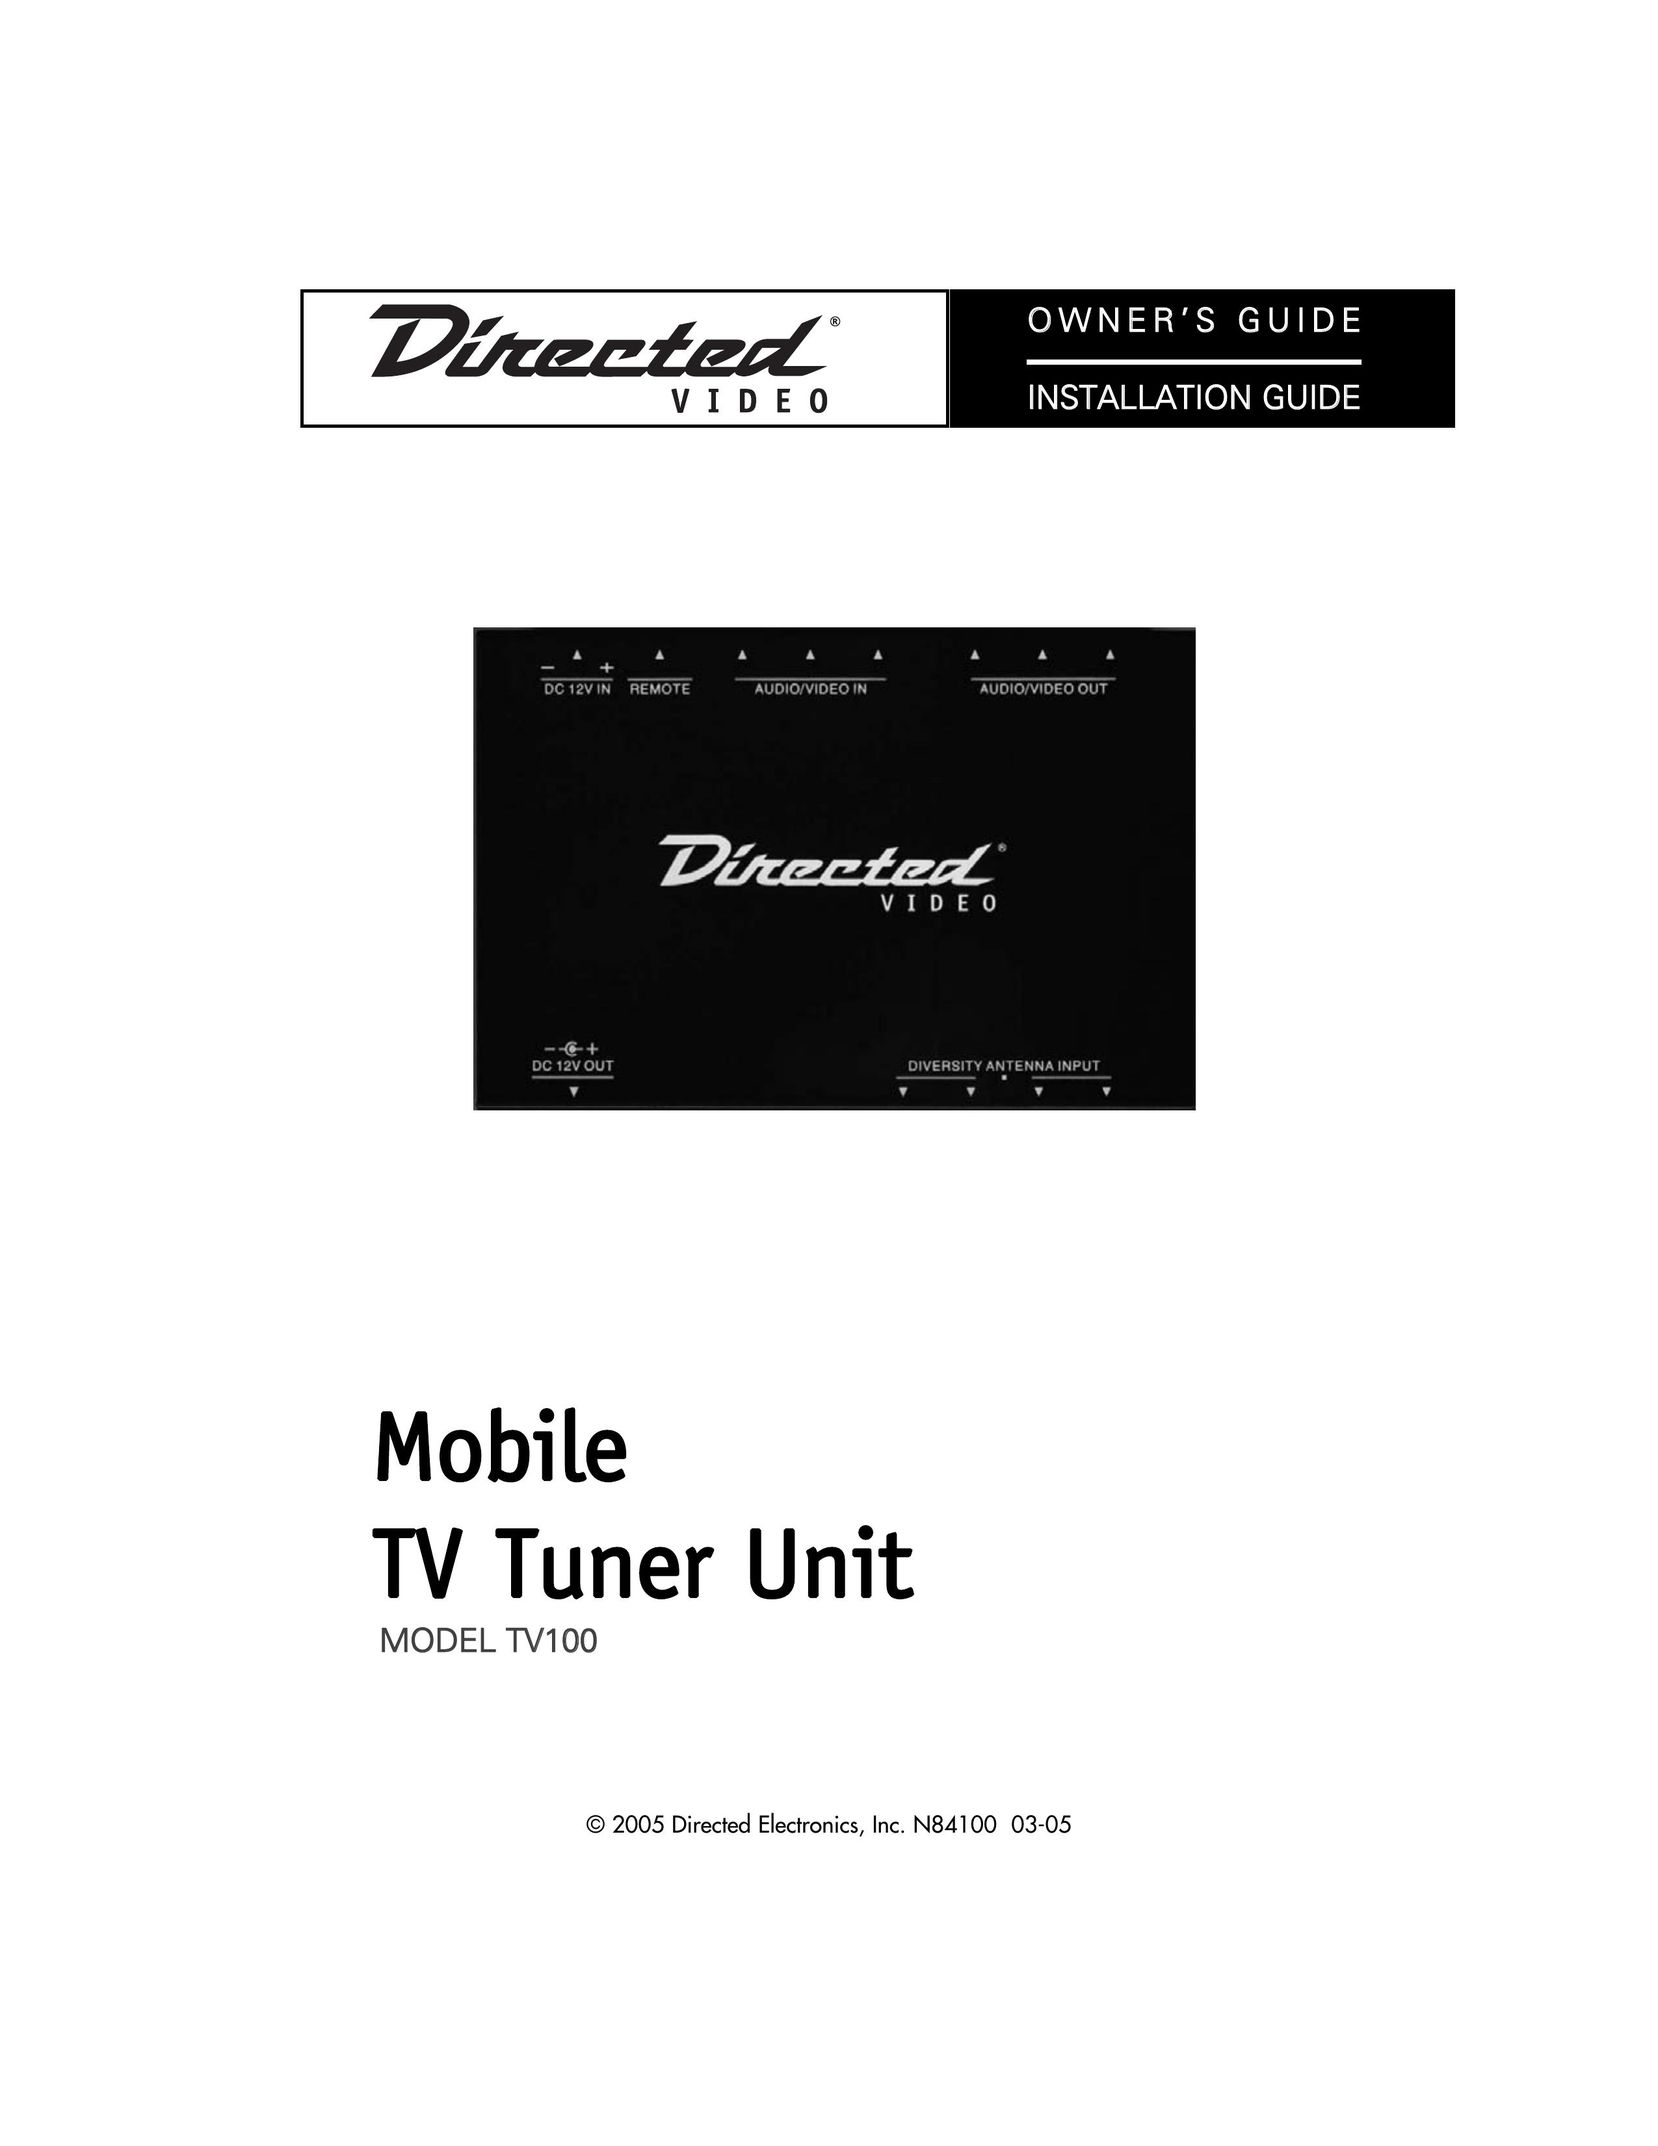 Directed Video TV100 TV Receiver User Manual